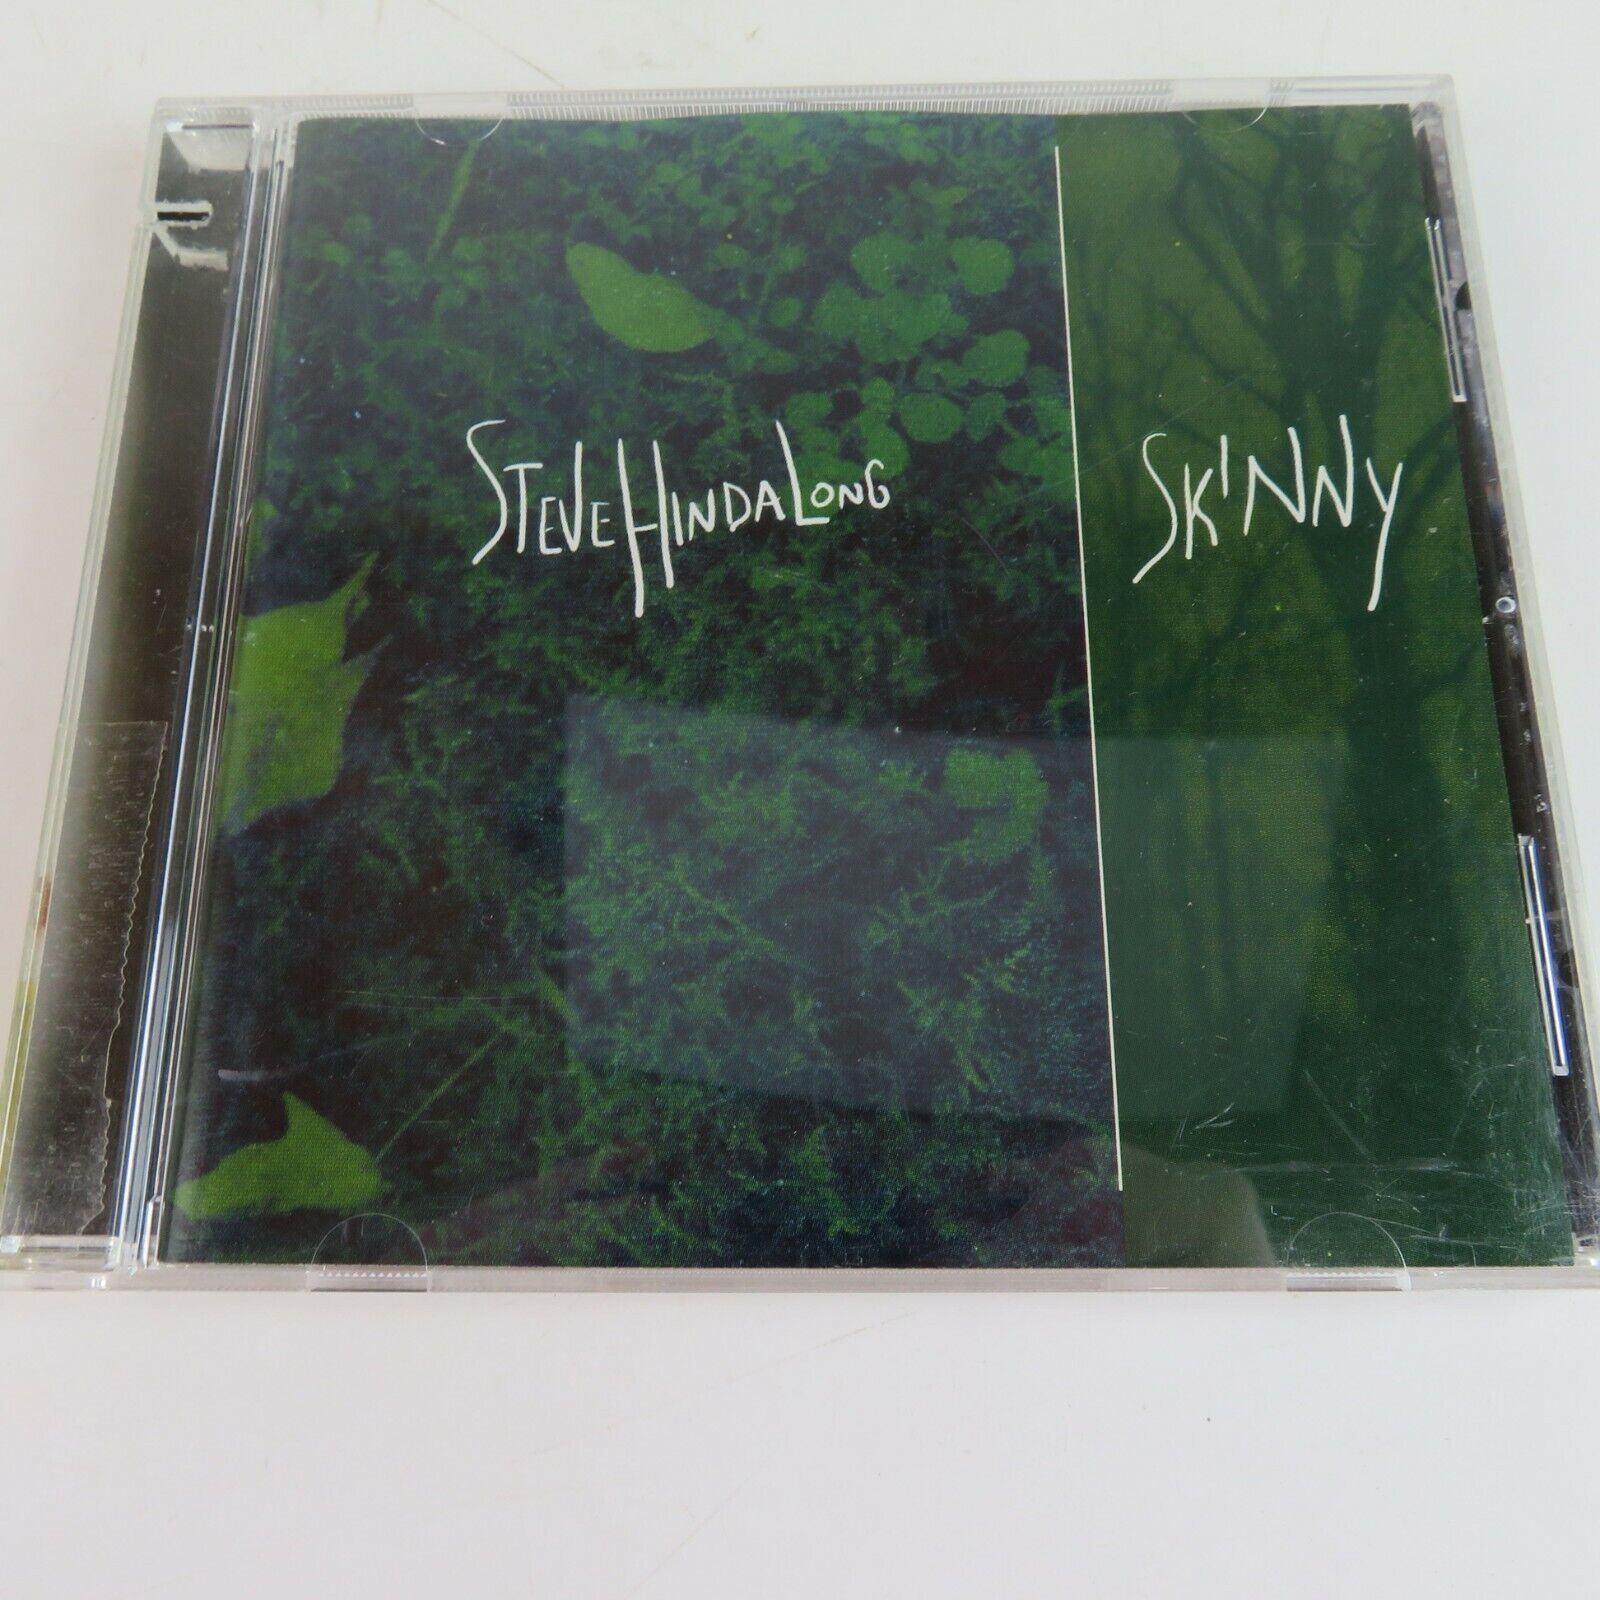 Vintage Steve Hindalong - Skinny 1998 Rock CD Album